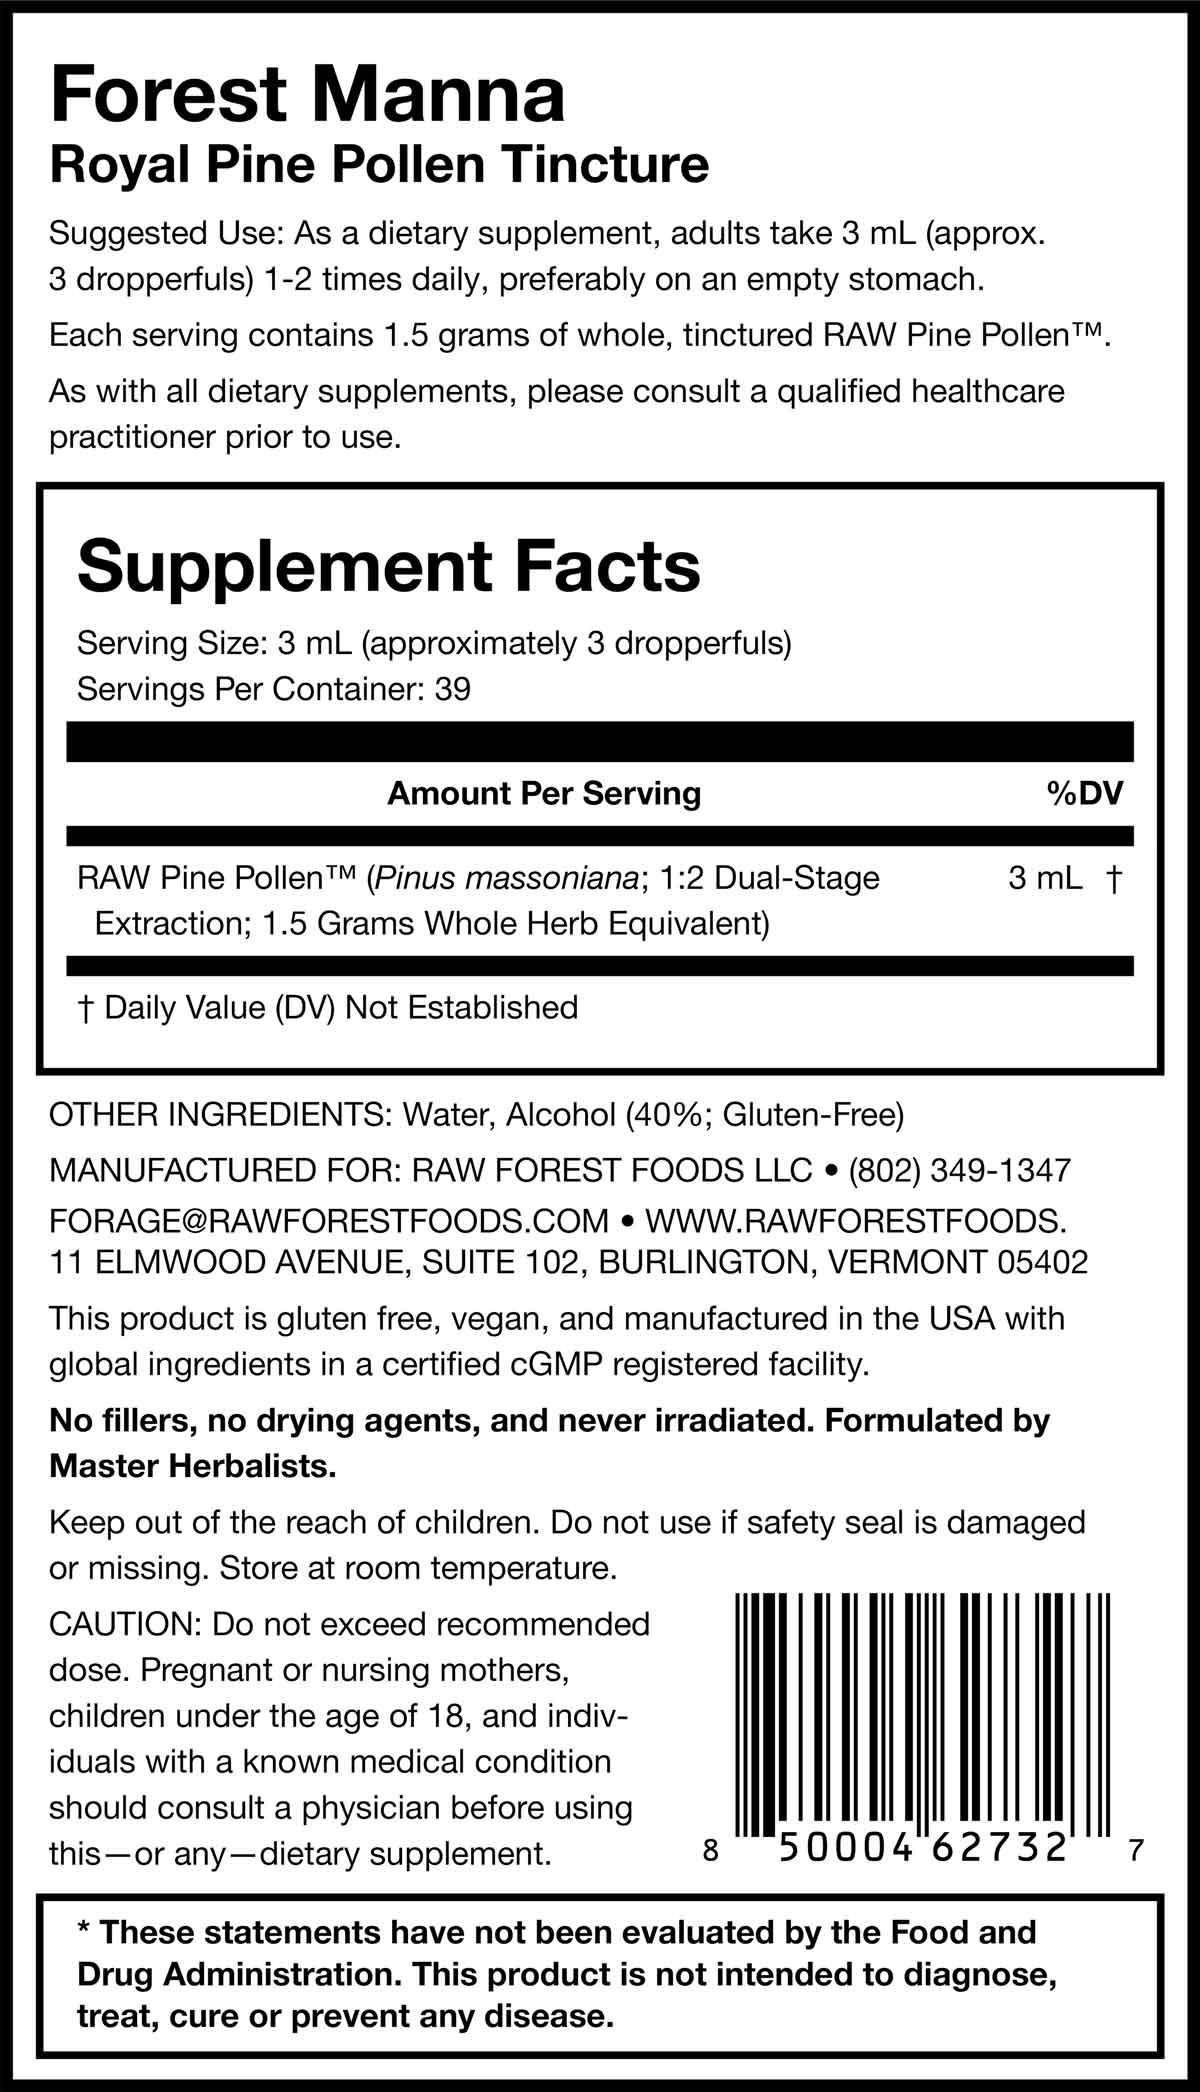 Forest Manna Royal Pine Pollen Tincture 4 Ounce Bottle Supplement Facts Panel